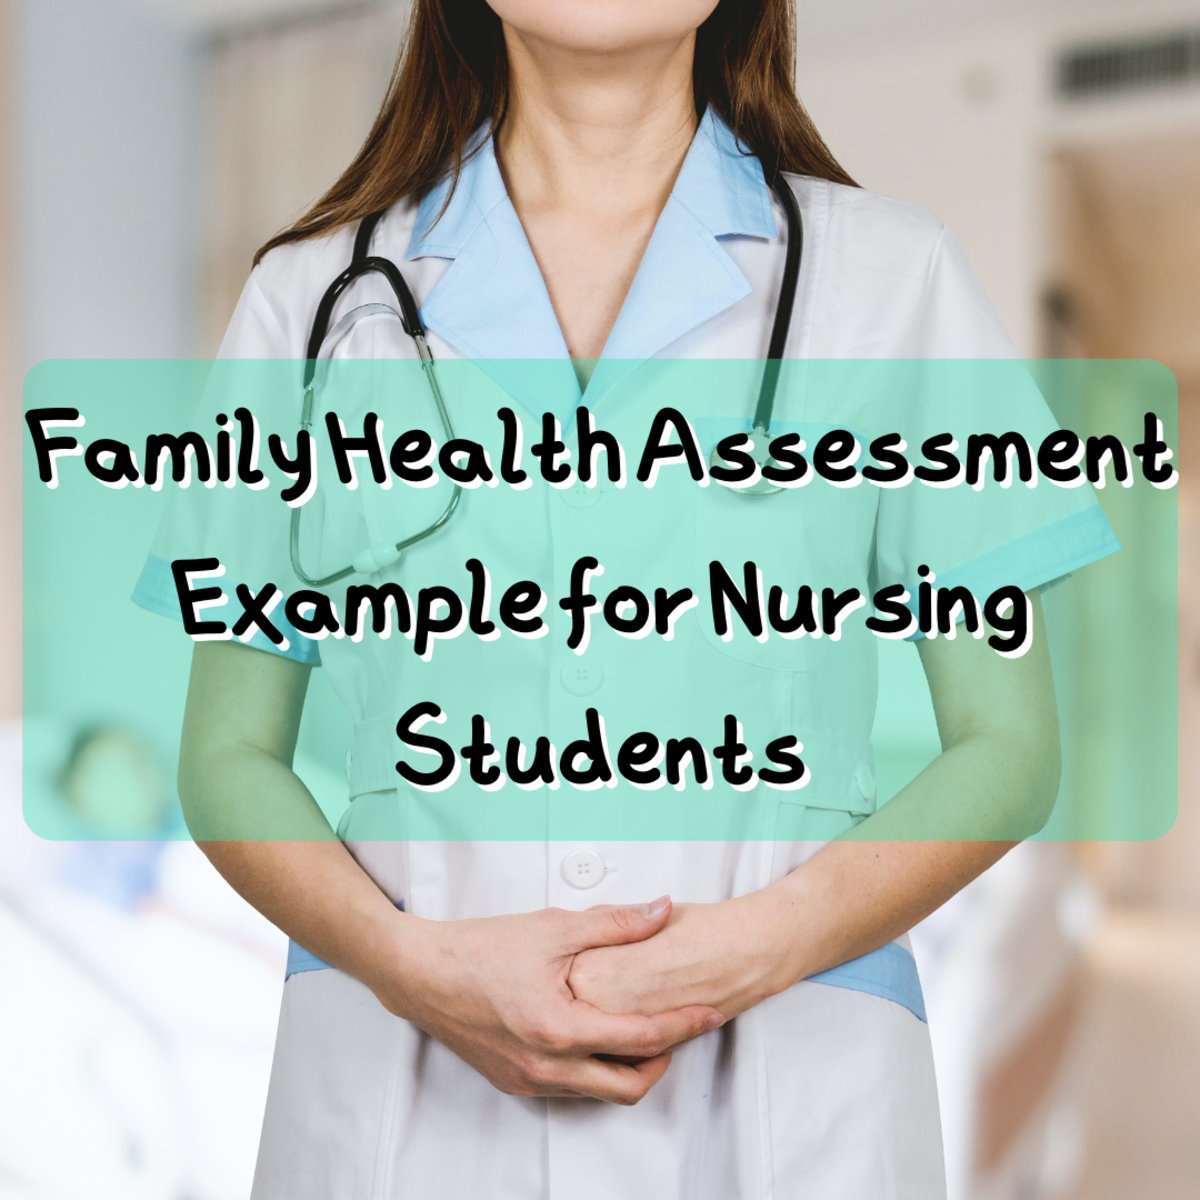 Family Health Assessment Example for Nursing Students